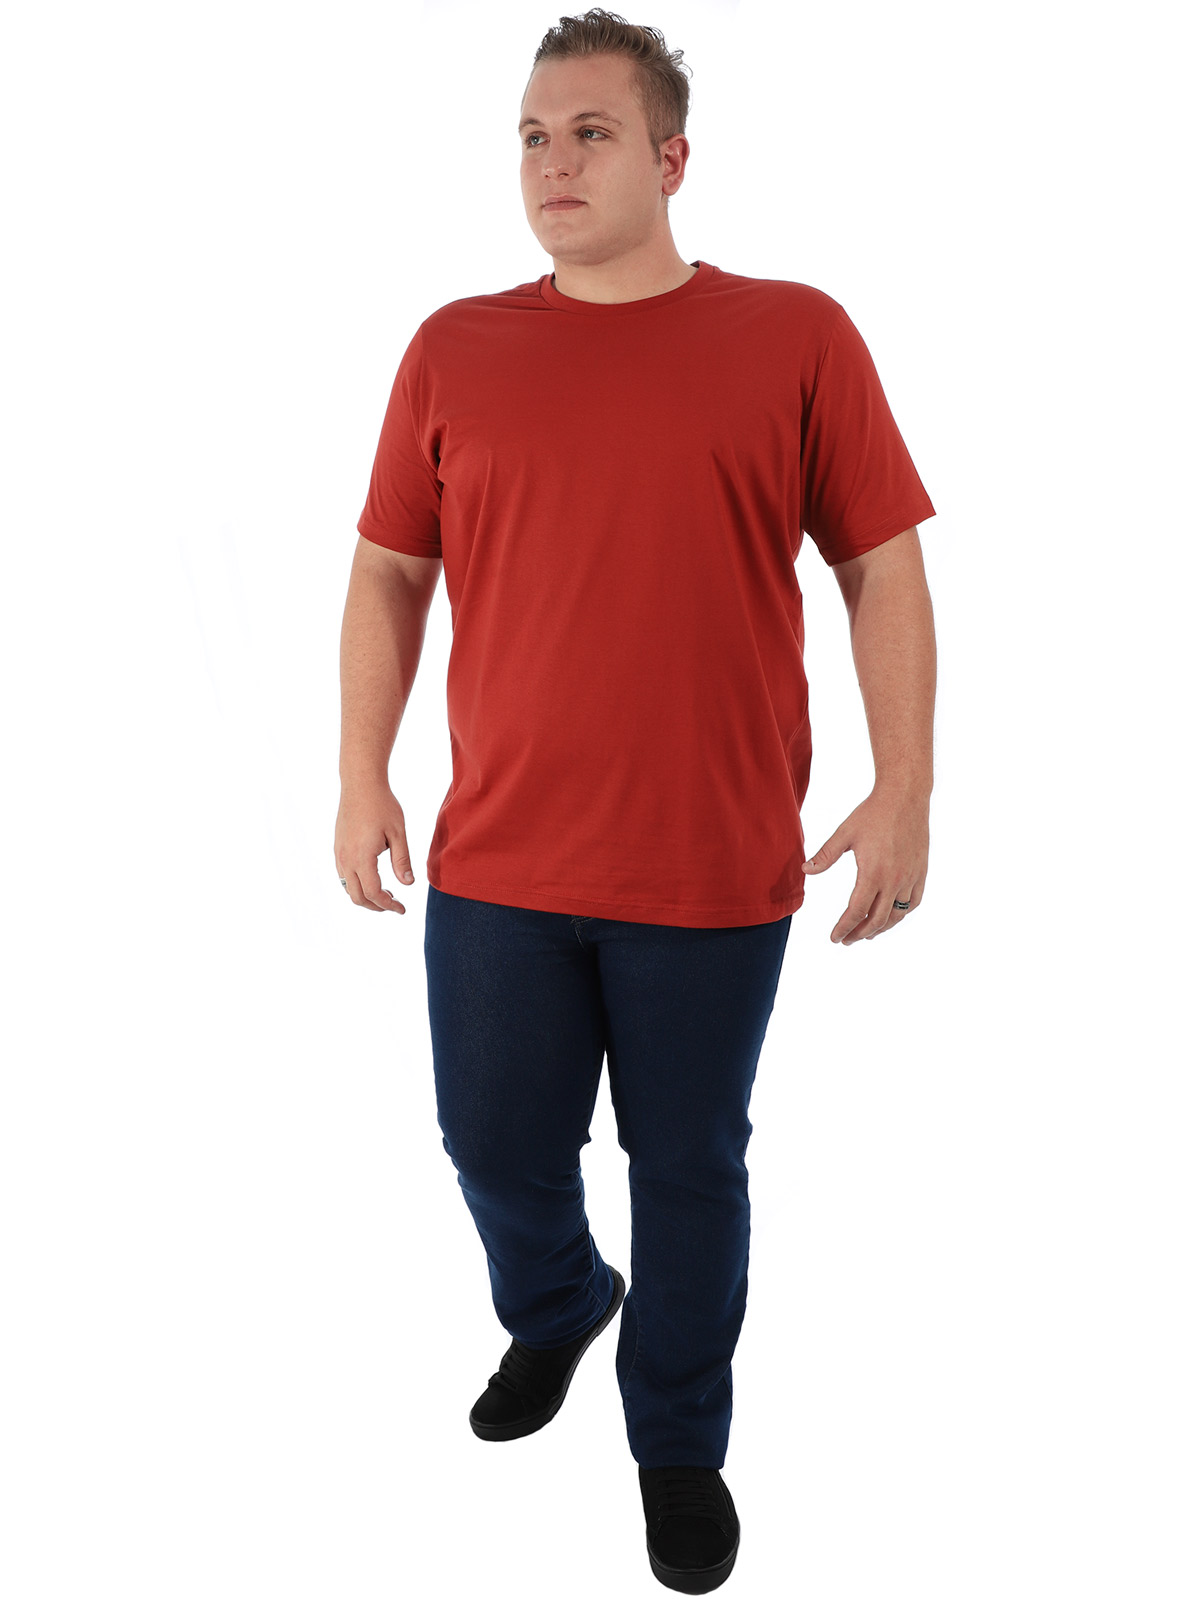 Camiseta Plus Size Lisa Masculina Básica Algodão Tijolo